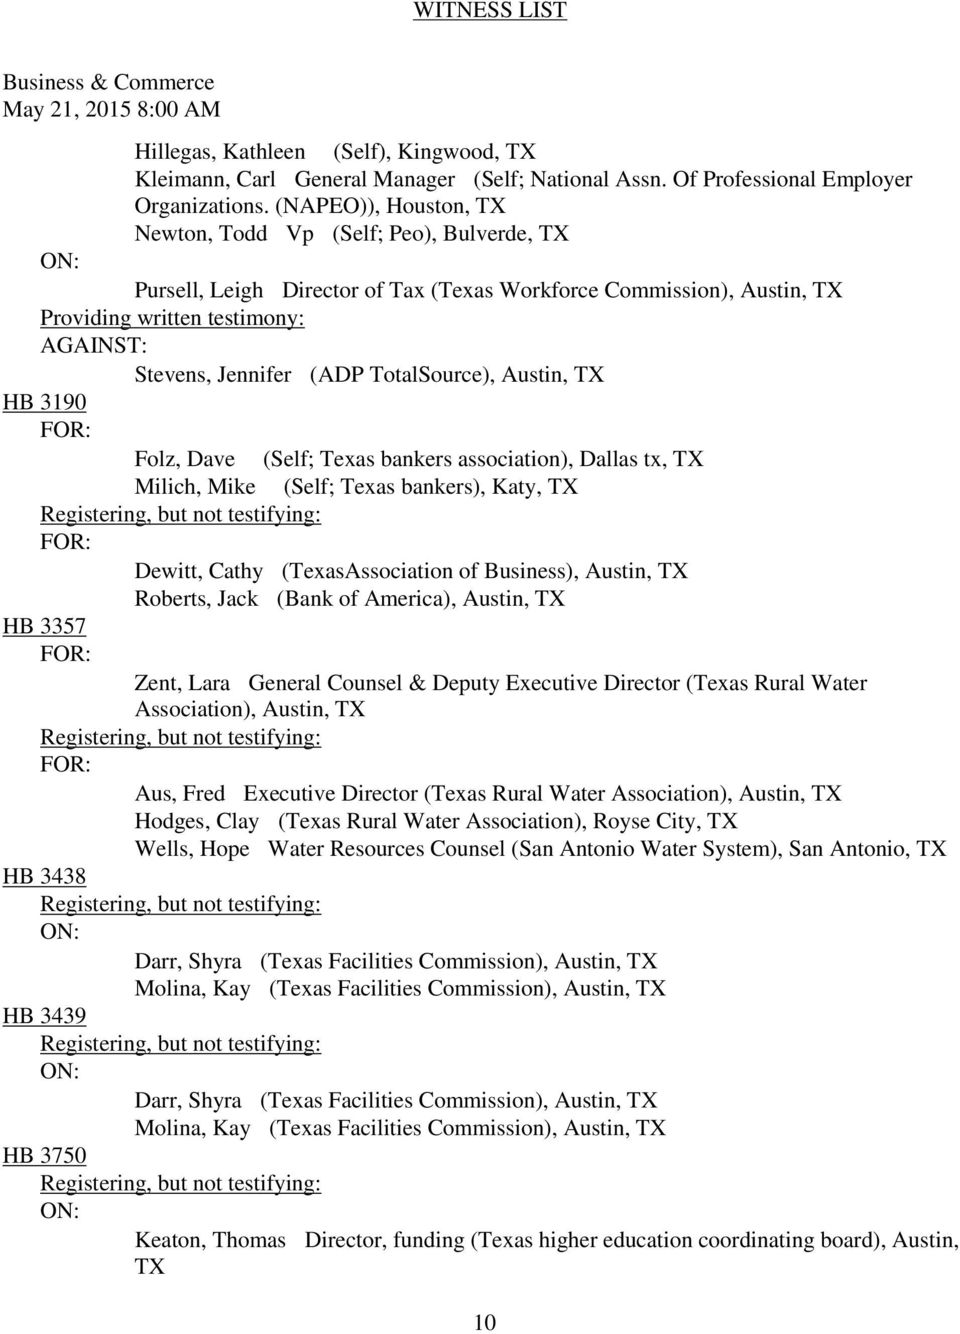 Texas bankers association), Dallas tx, Milich, Mike (Self; Texas bankers), Katy, Dewitt, Cathy (TexasAssociation of Business), Austin, Roberts, Jack (Bank of America), Austin, HB 3357 Zent, Lara